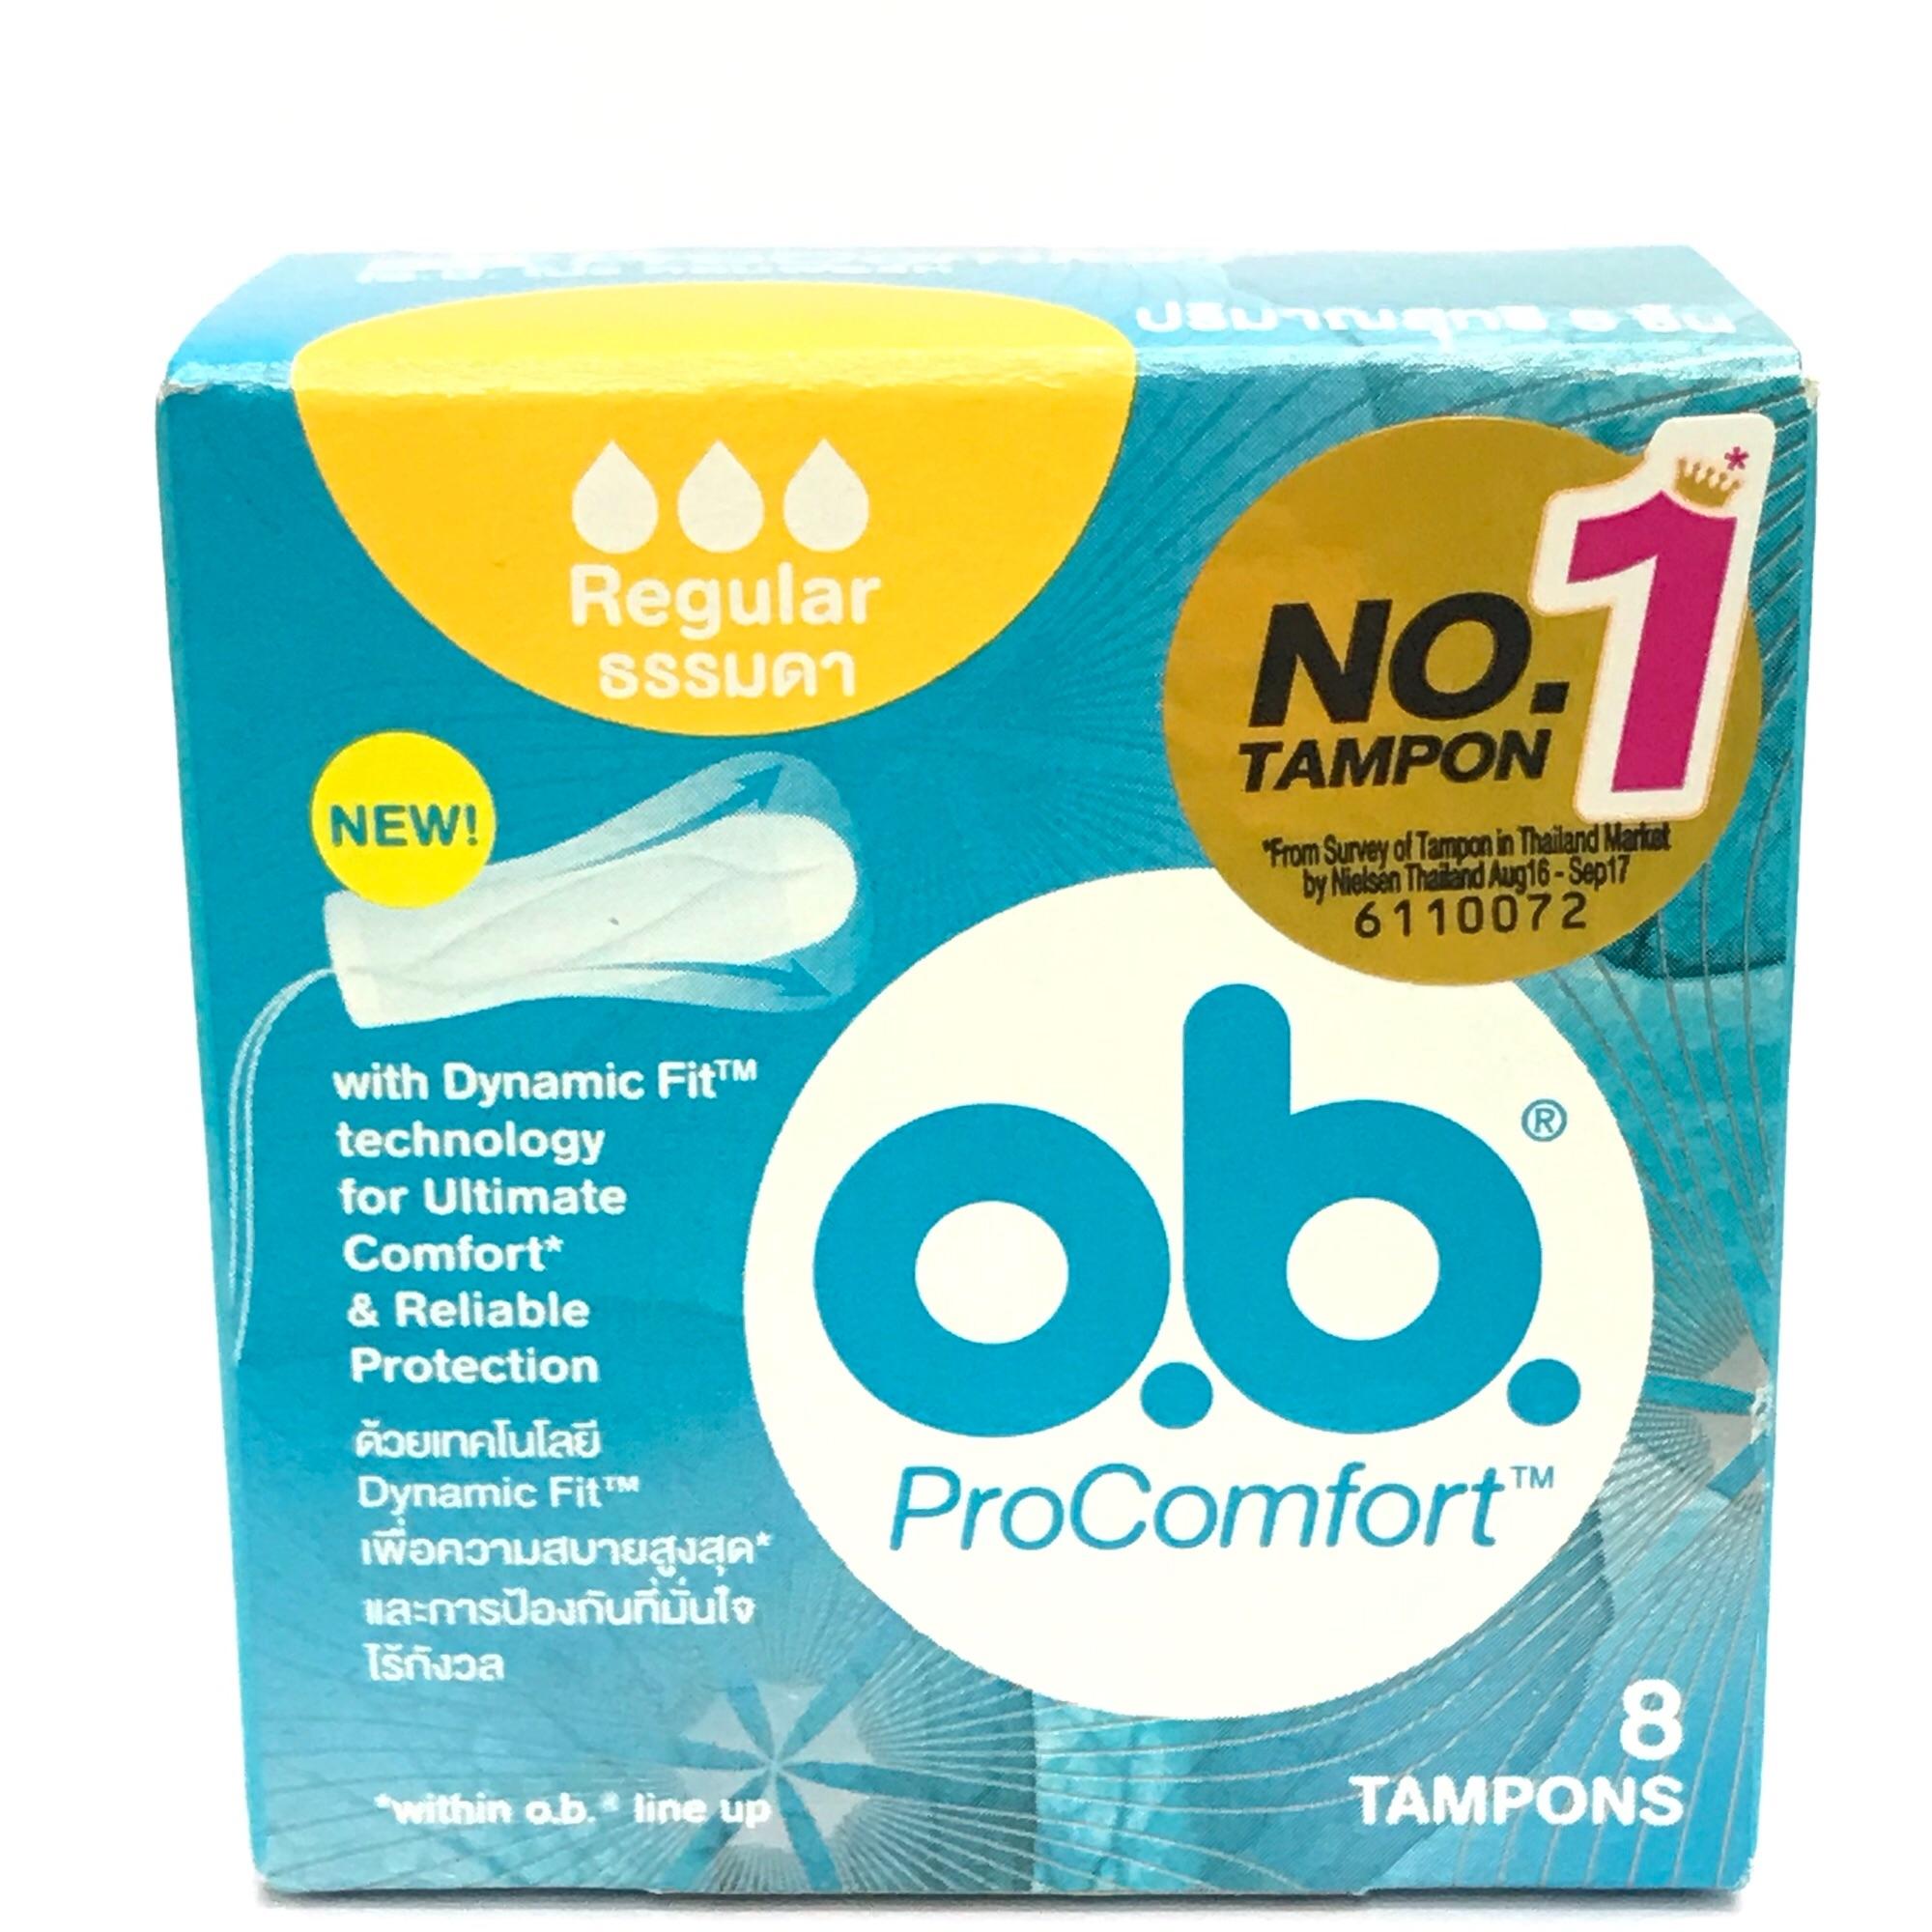 O.B. ProComfort tampons Regular โอบี ผ้าอนามัยแบบสอด ขนาดกลาง 1 กล่องมี8 ชิ้น